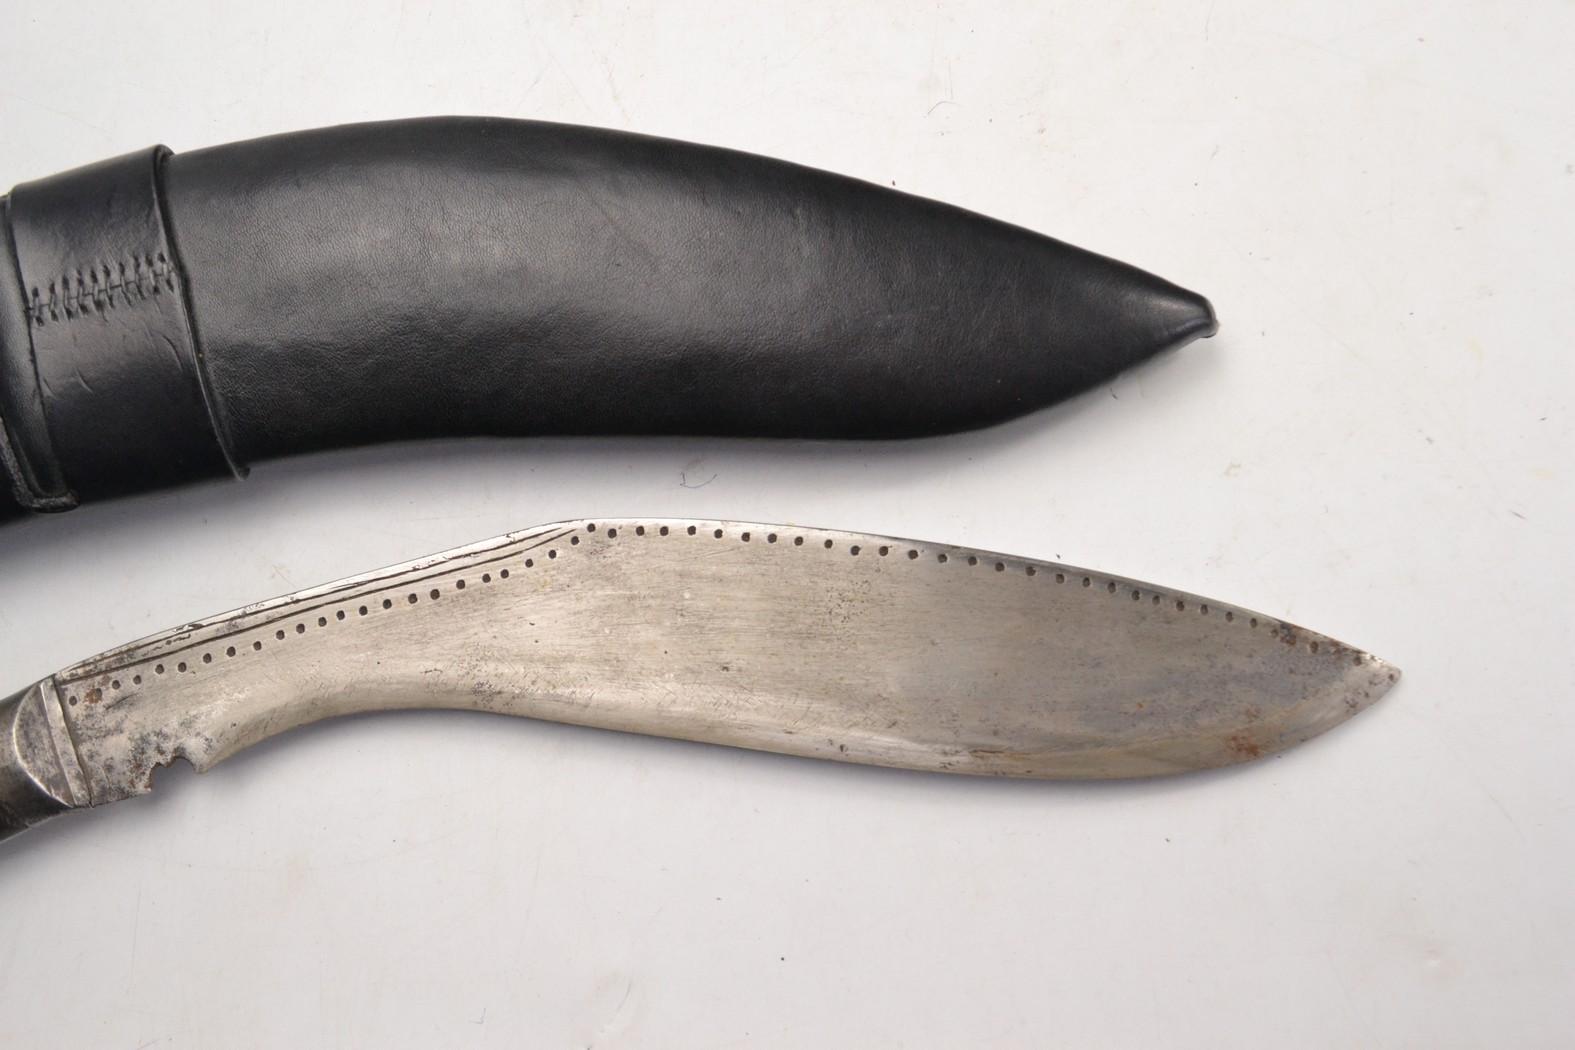 Gurkha Kukri knife with black leather sheath, blade length 30cm approx. - Image 8 of 10